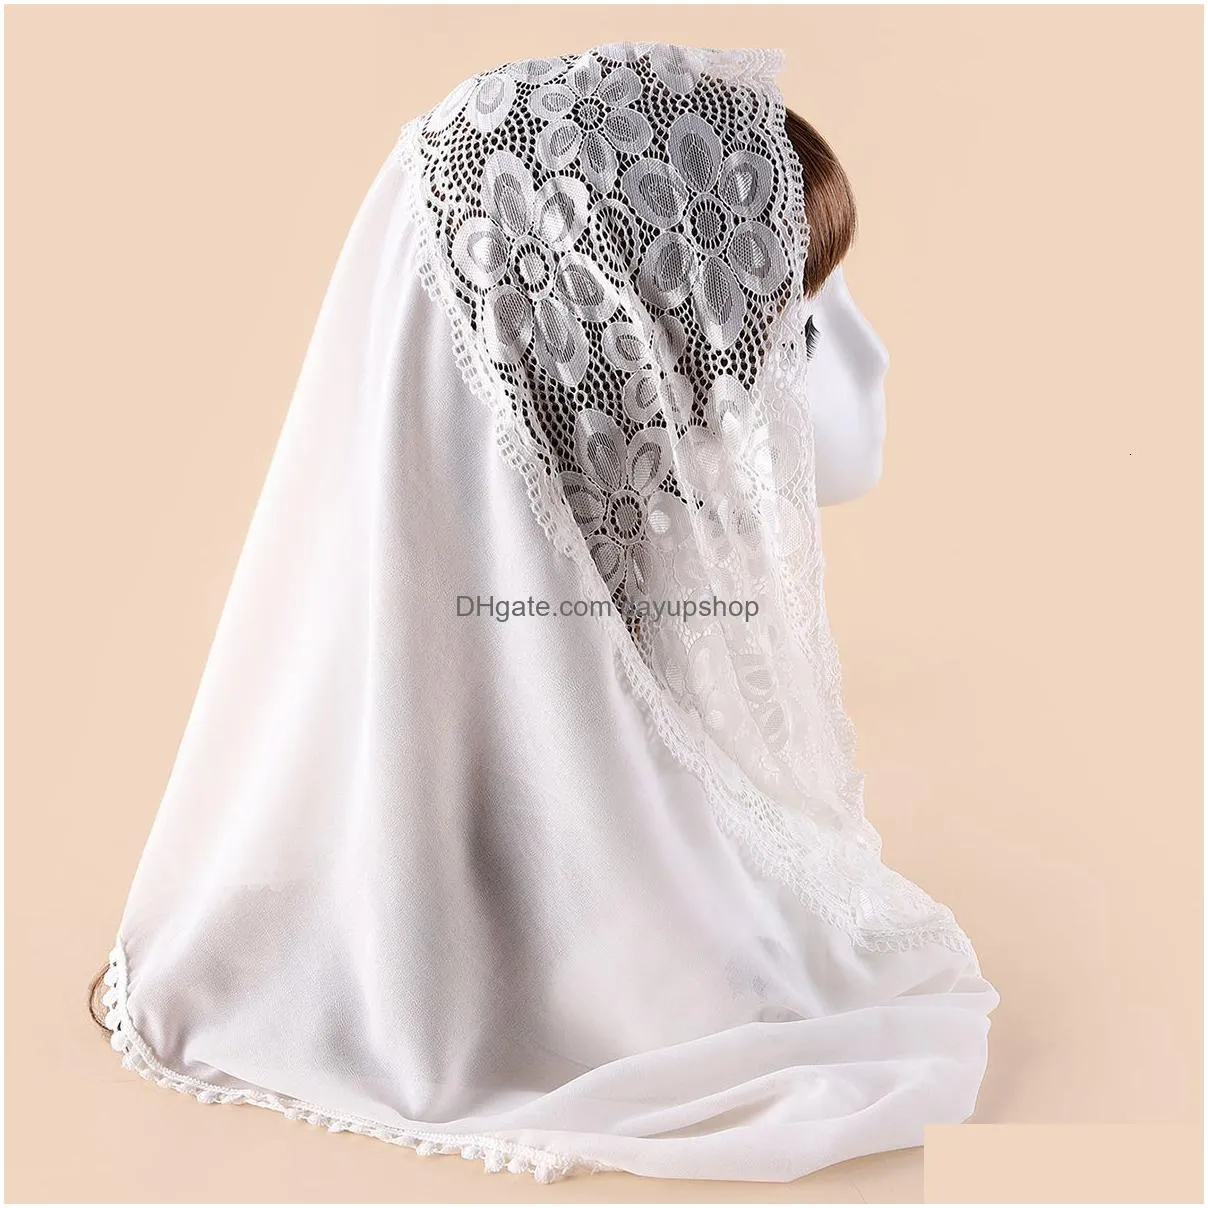 hijabs high quality catholic wedding veil prayer turban shawl church ladies flowers lace long scarf muslim women hijab scarves headwear